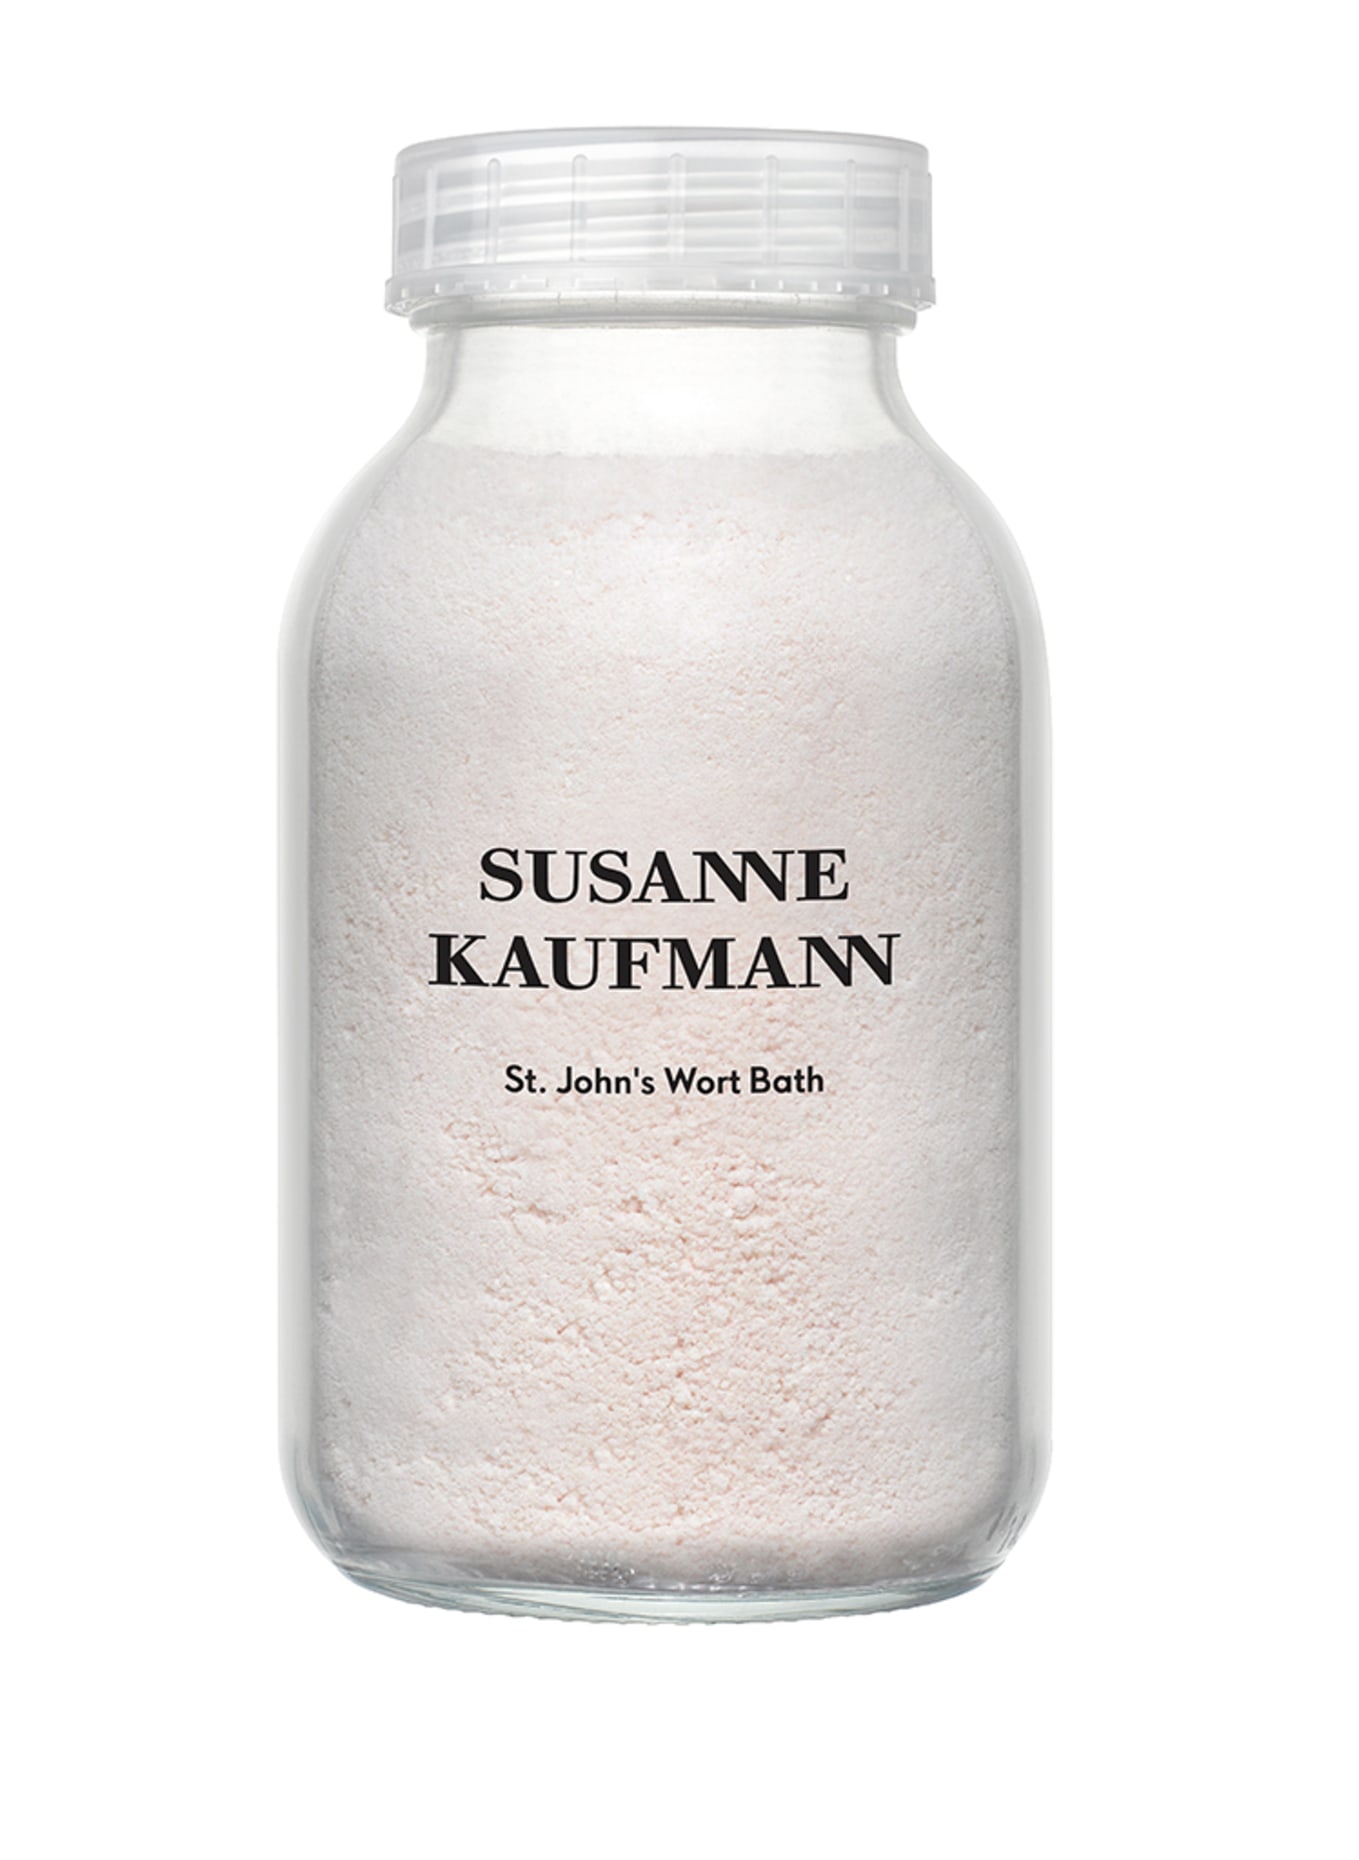 SUSANNE KAUFMANN ST. JOHN'S WORT BATH (Obrázek 1)